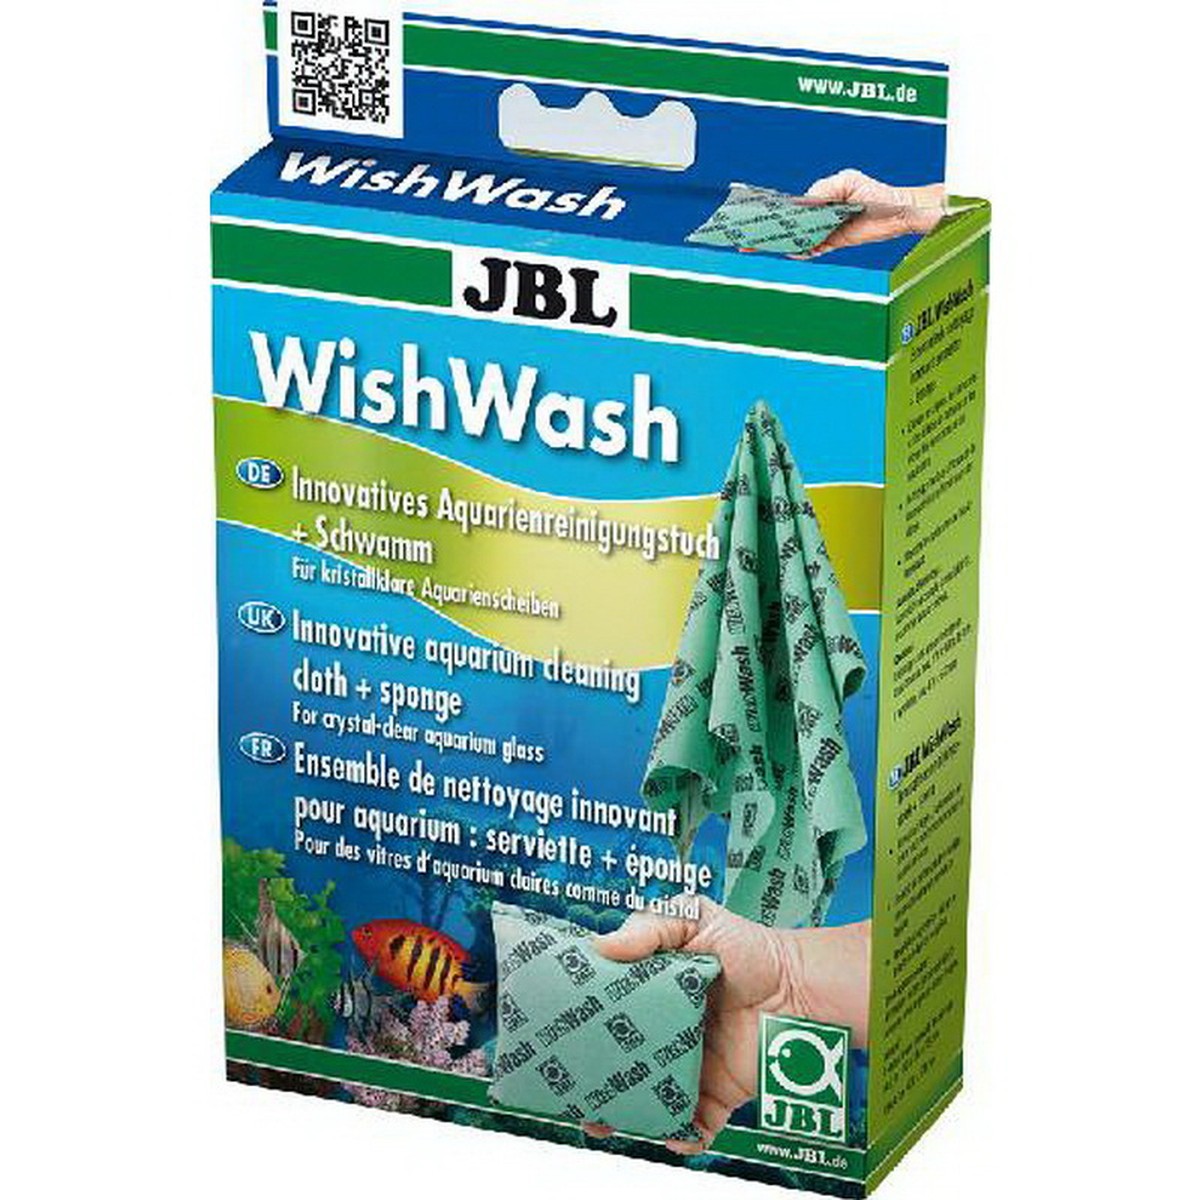   JBL WishWash Aqua (A)  